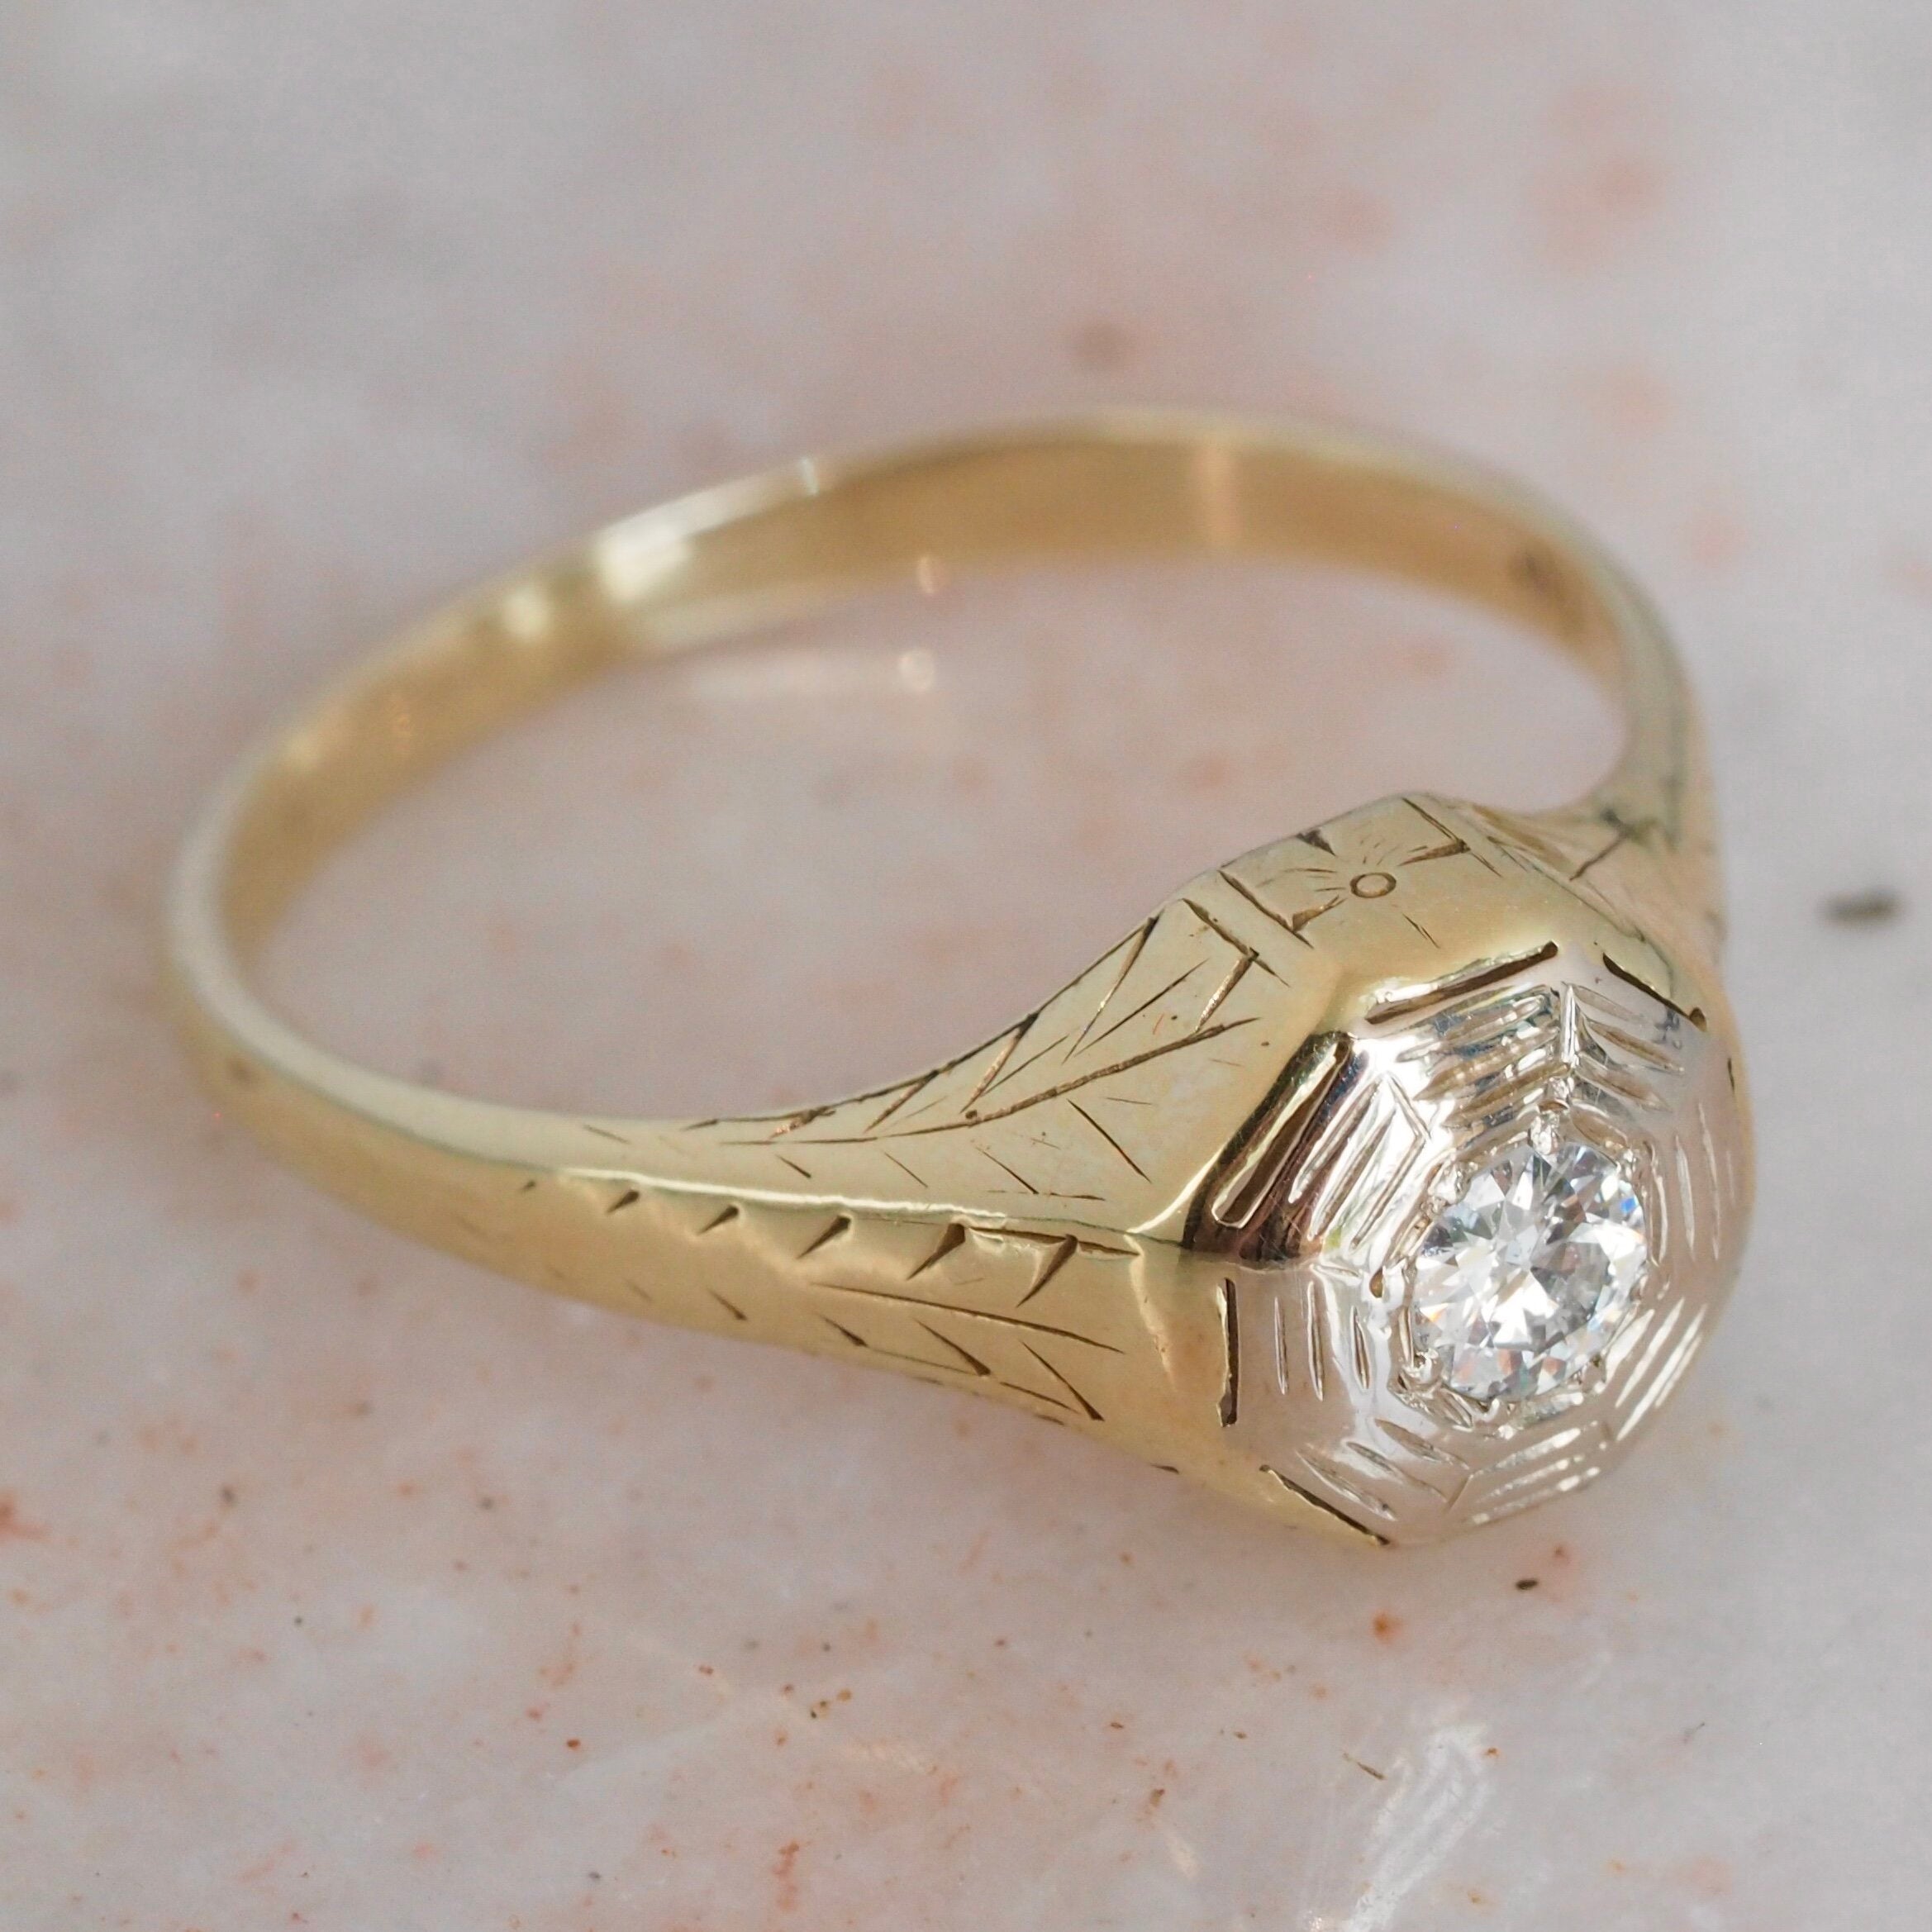 Art Deco 14k Gold Old European Cut Diamond Ring